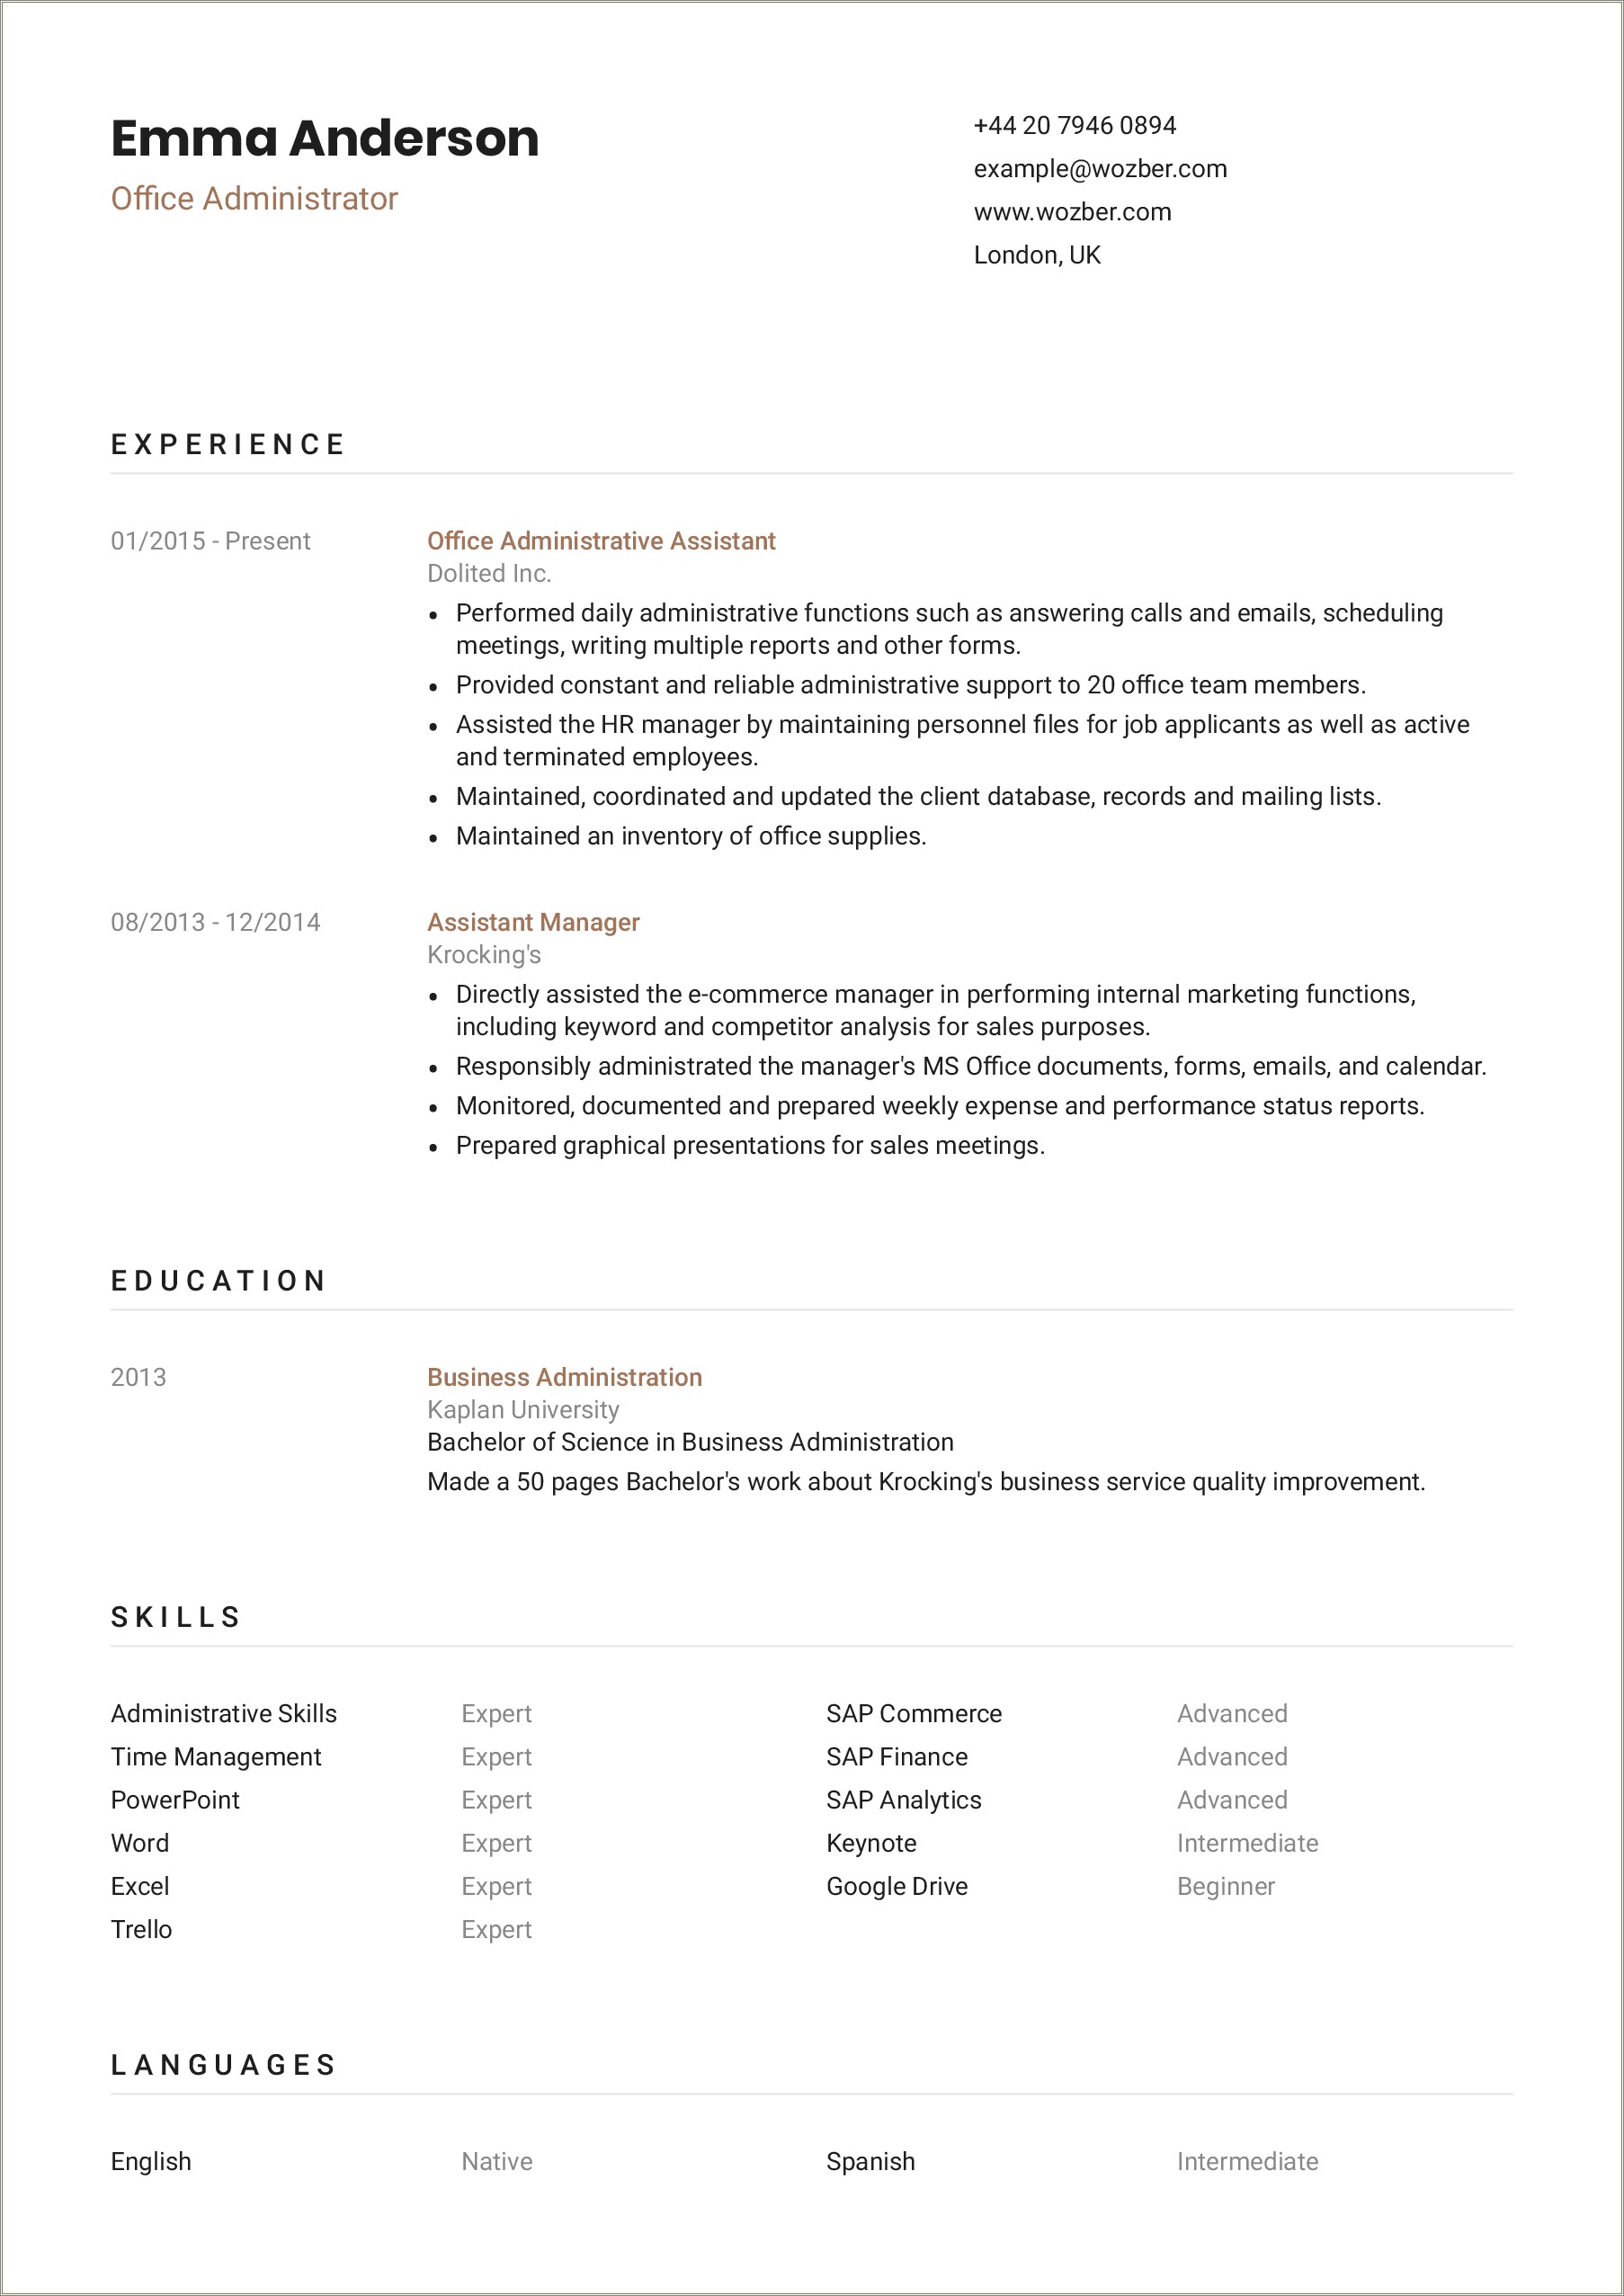 Job Description For Office Coordinator Resume